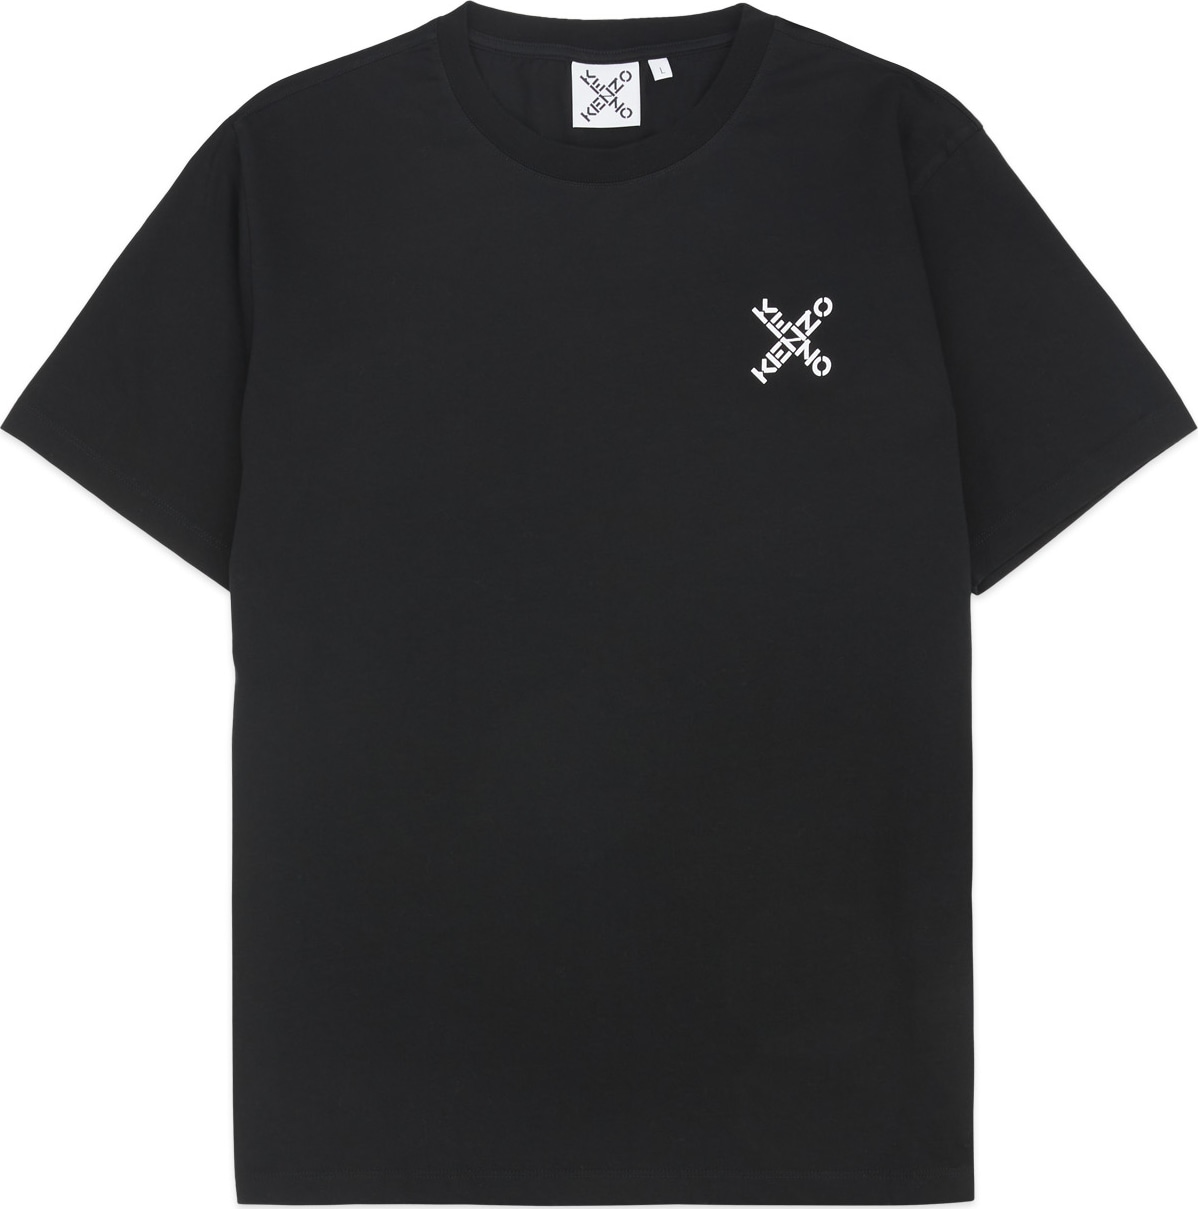 Kenzo: Kenzo Sport 'Little X' T-Shirt - Black | influenceu